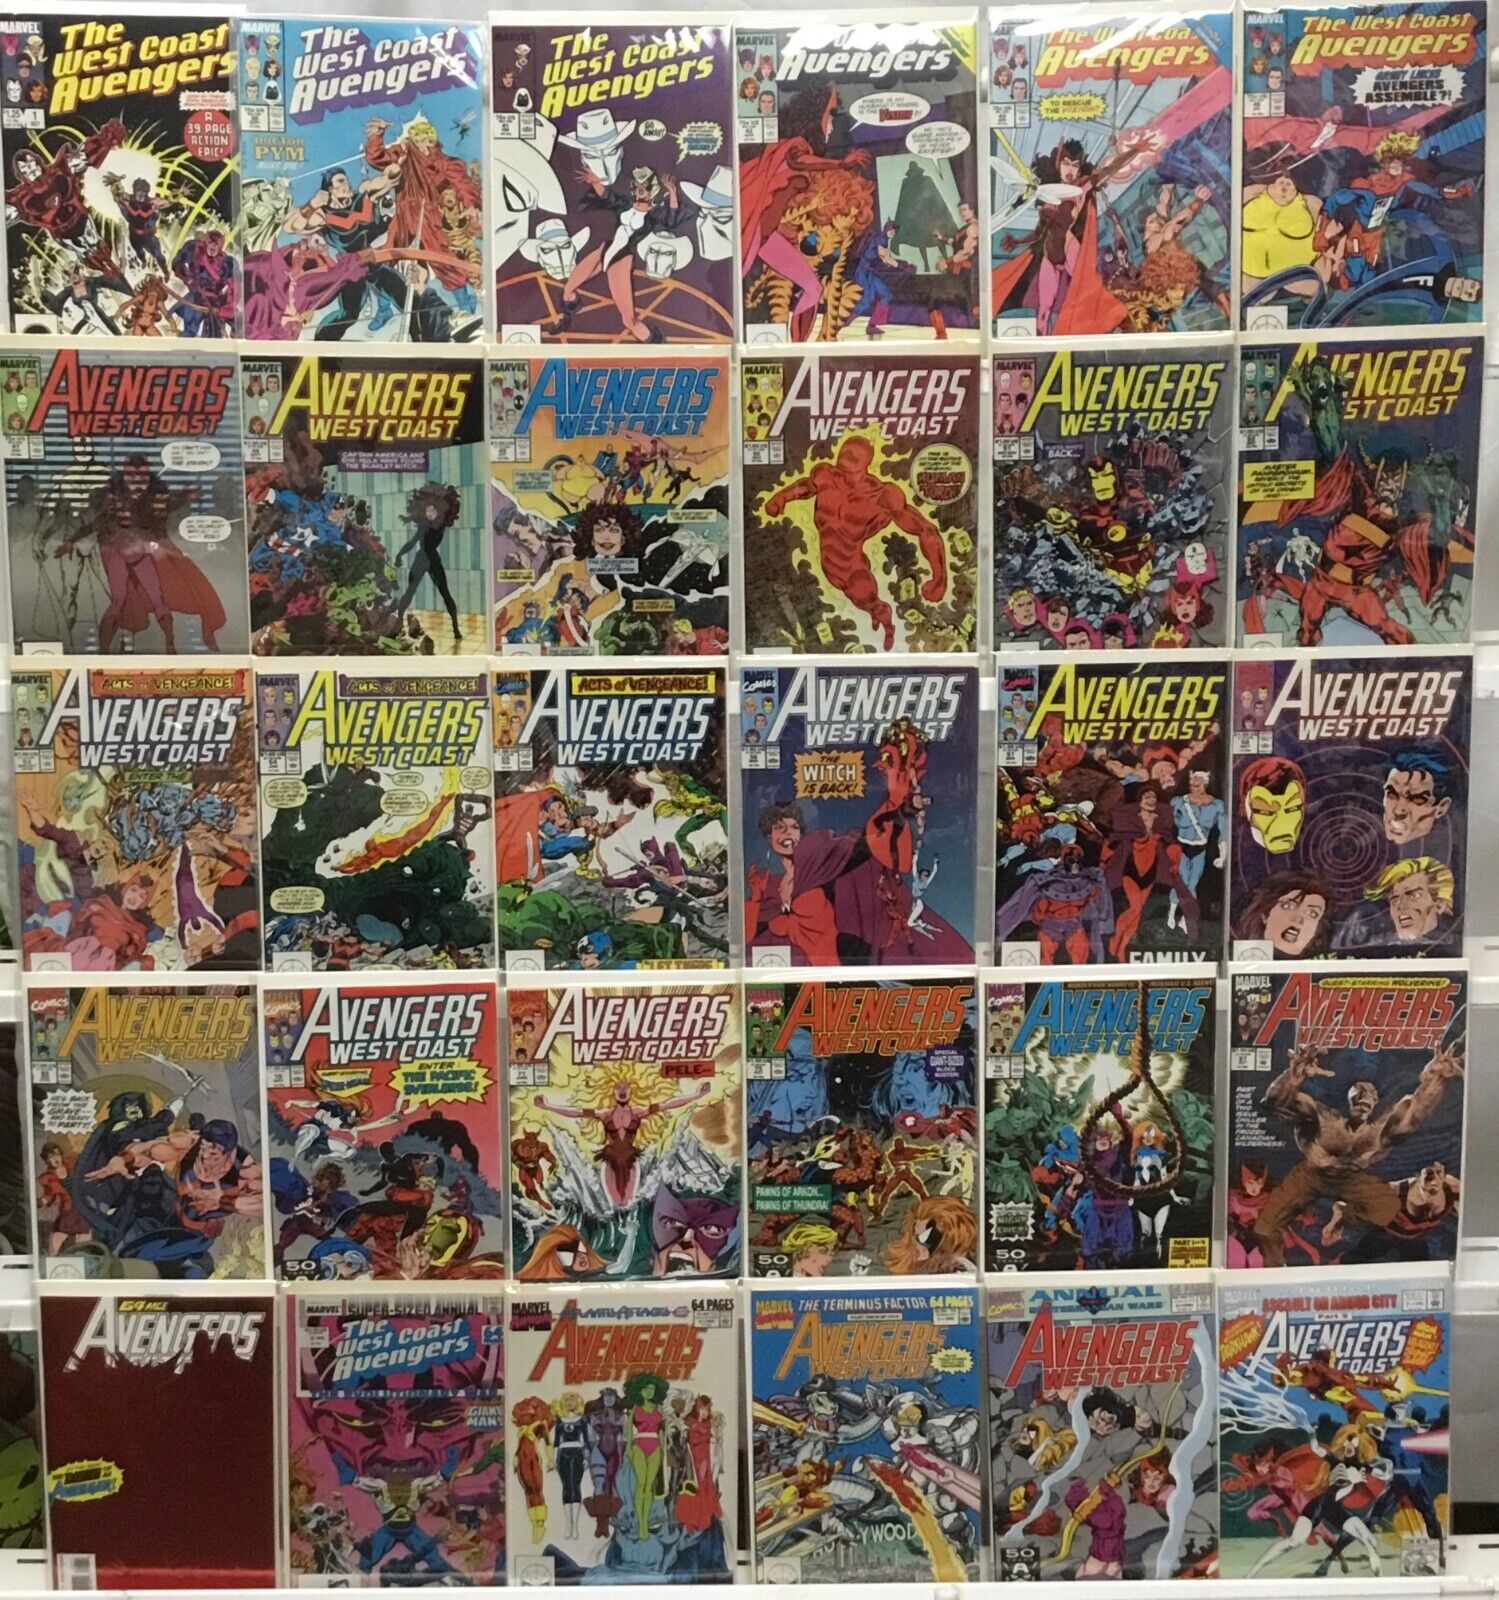 Marvel Comics West Coast Avengers 1st Series Comic Book Lot of 30 - READ BIO